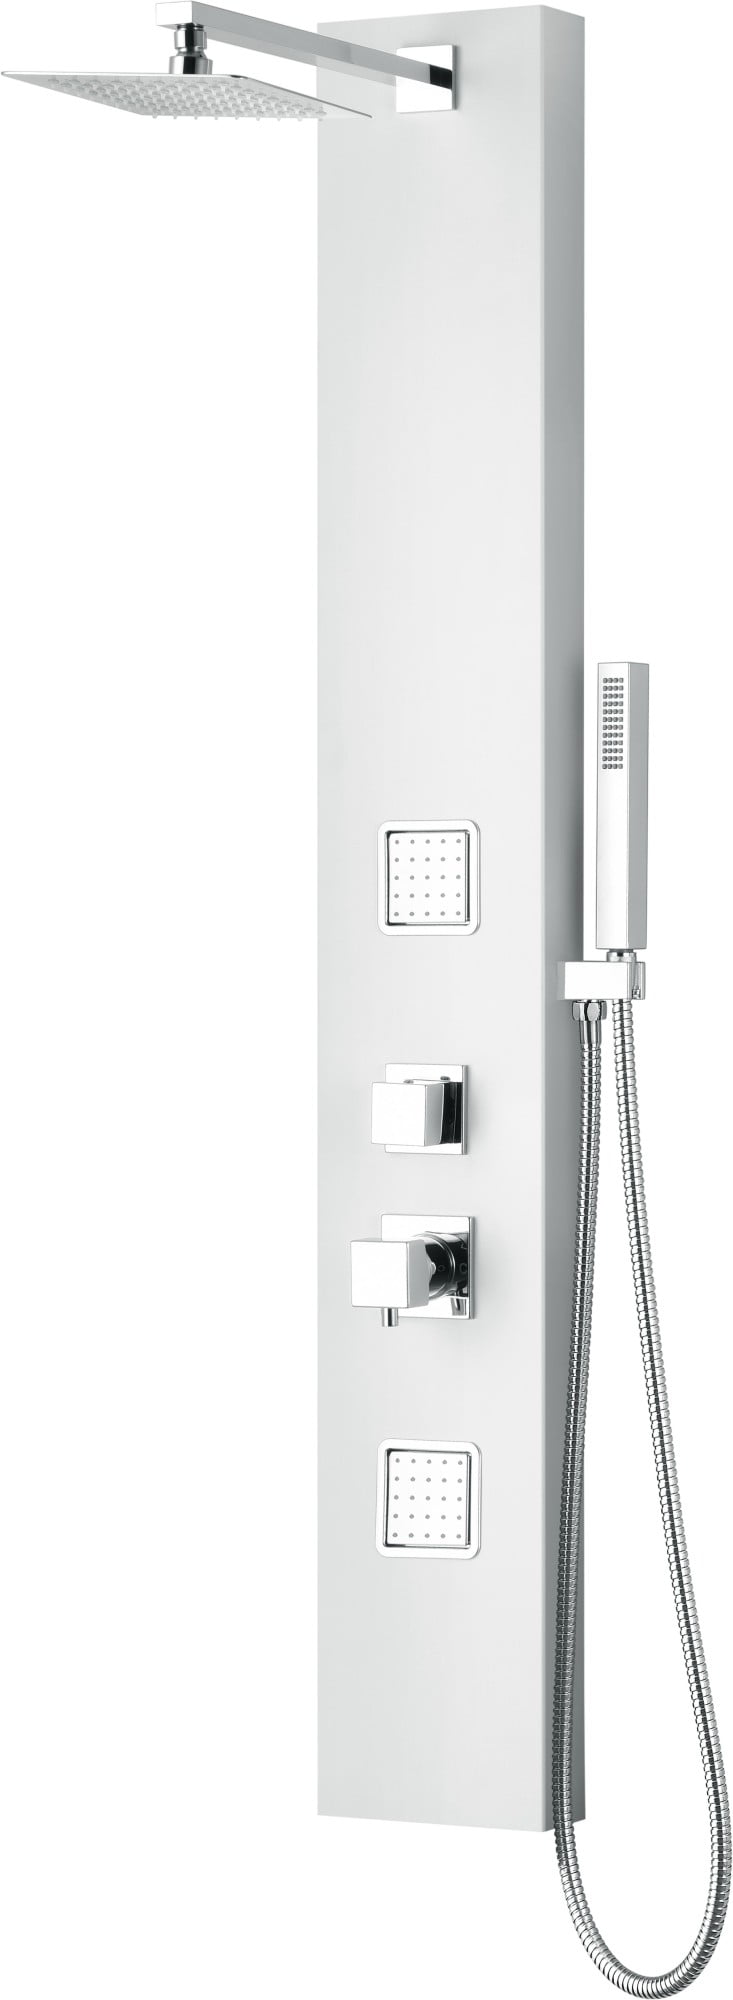 Absp60w White Aluminum Shower Panel With 2 Body Sprays & Rain Shower Head